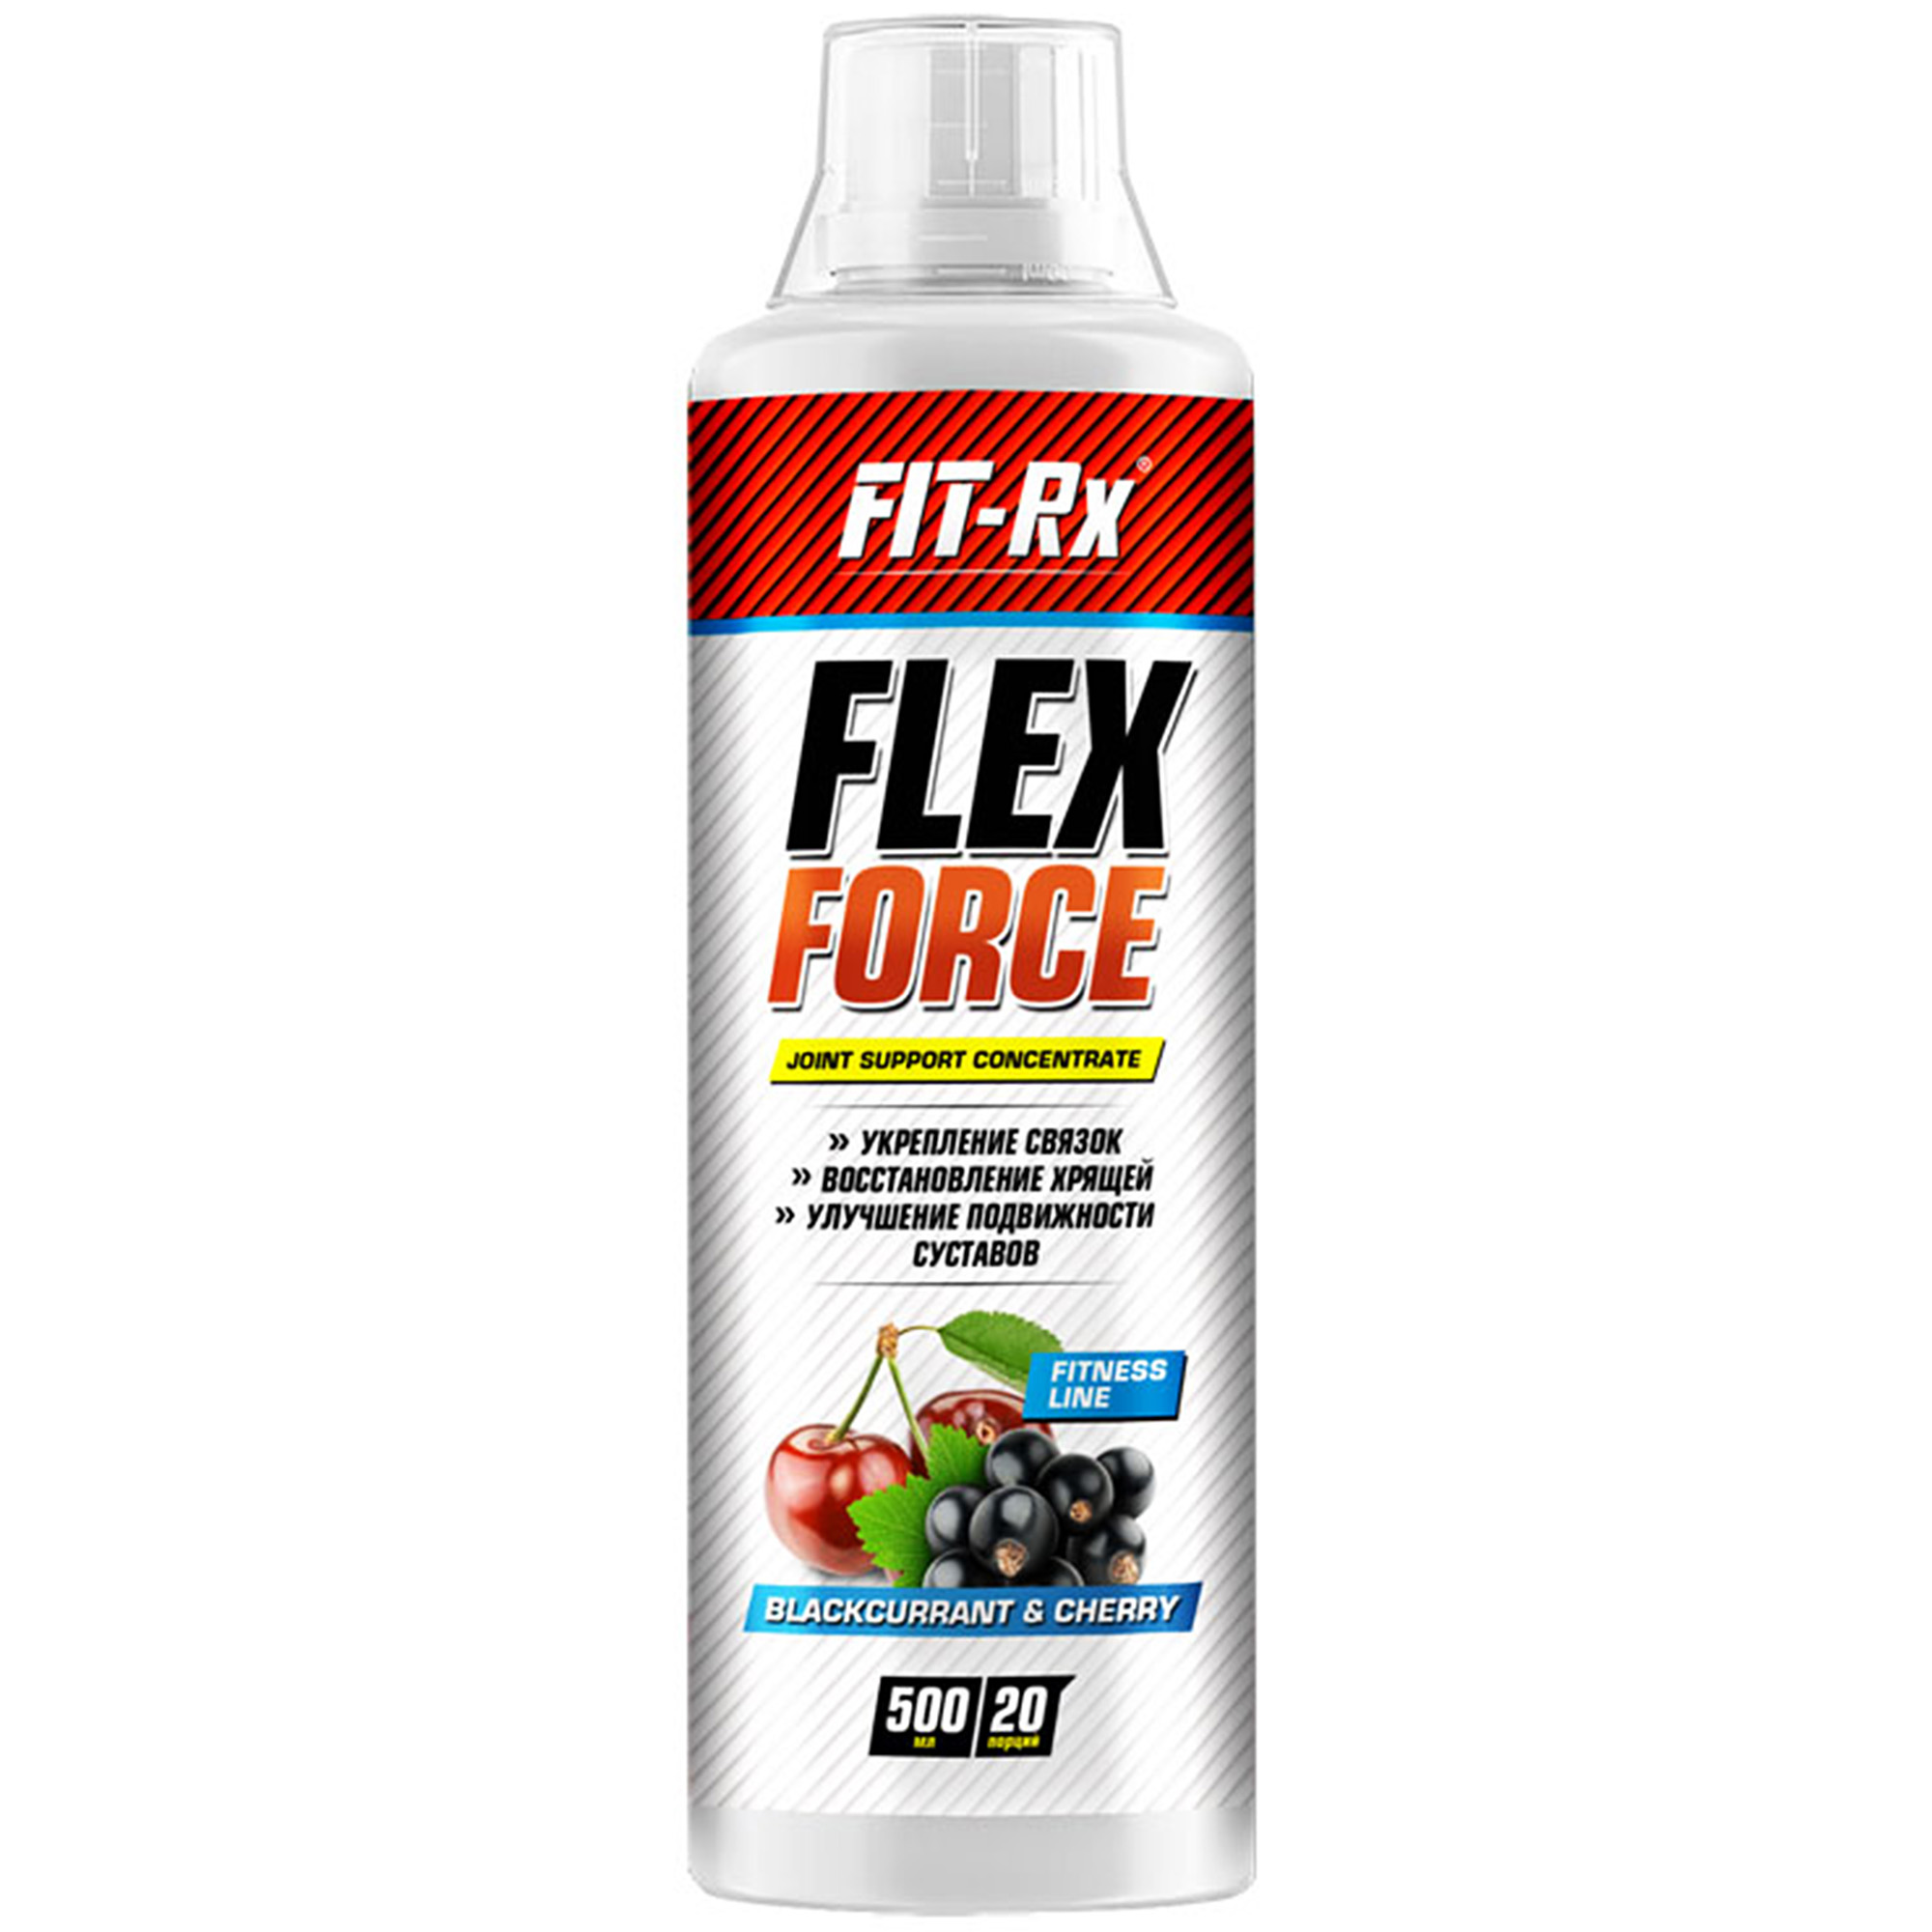 Flex Force Fit-Rx смородина-вишня, 500 мл